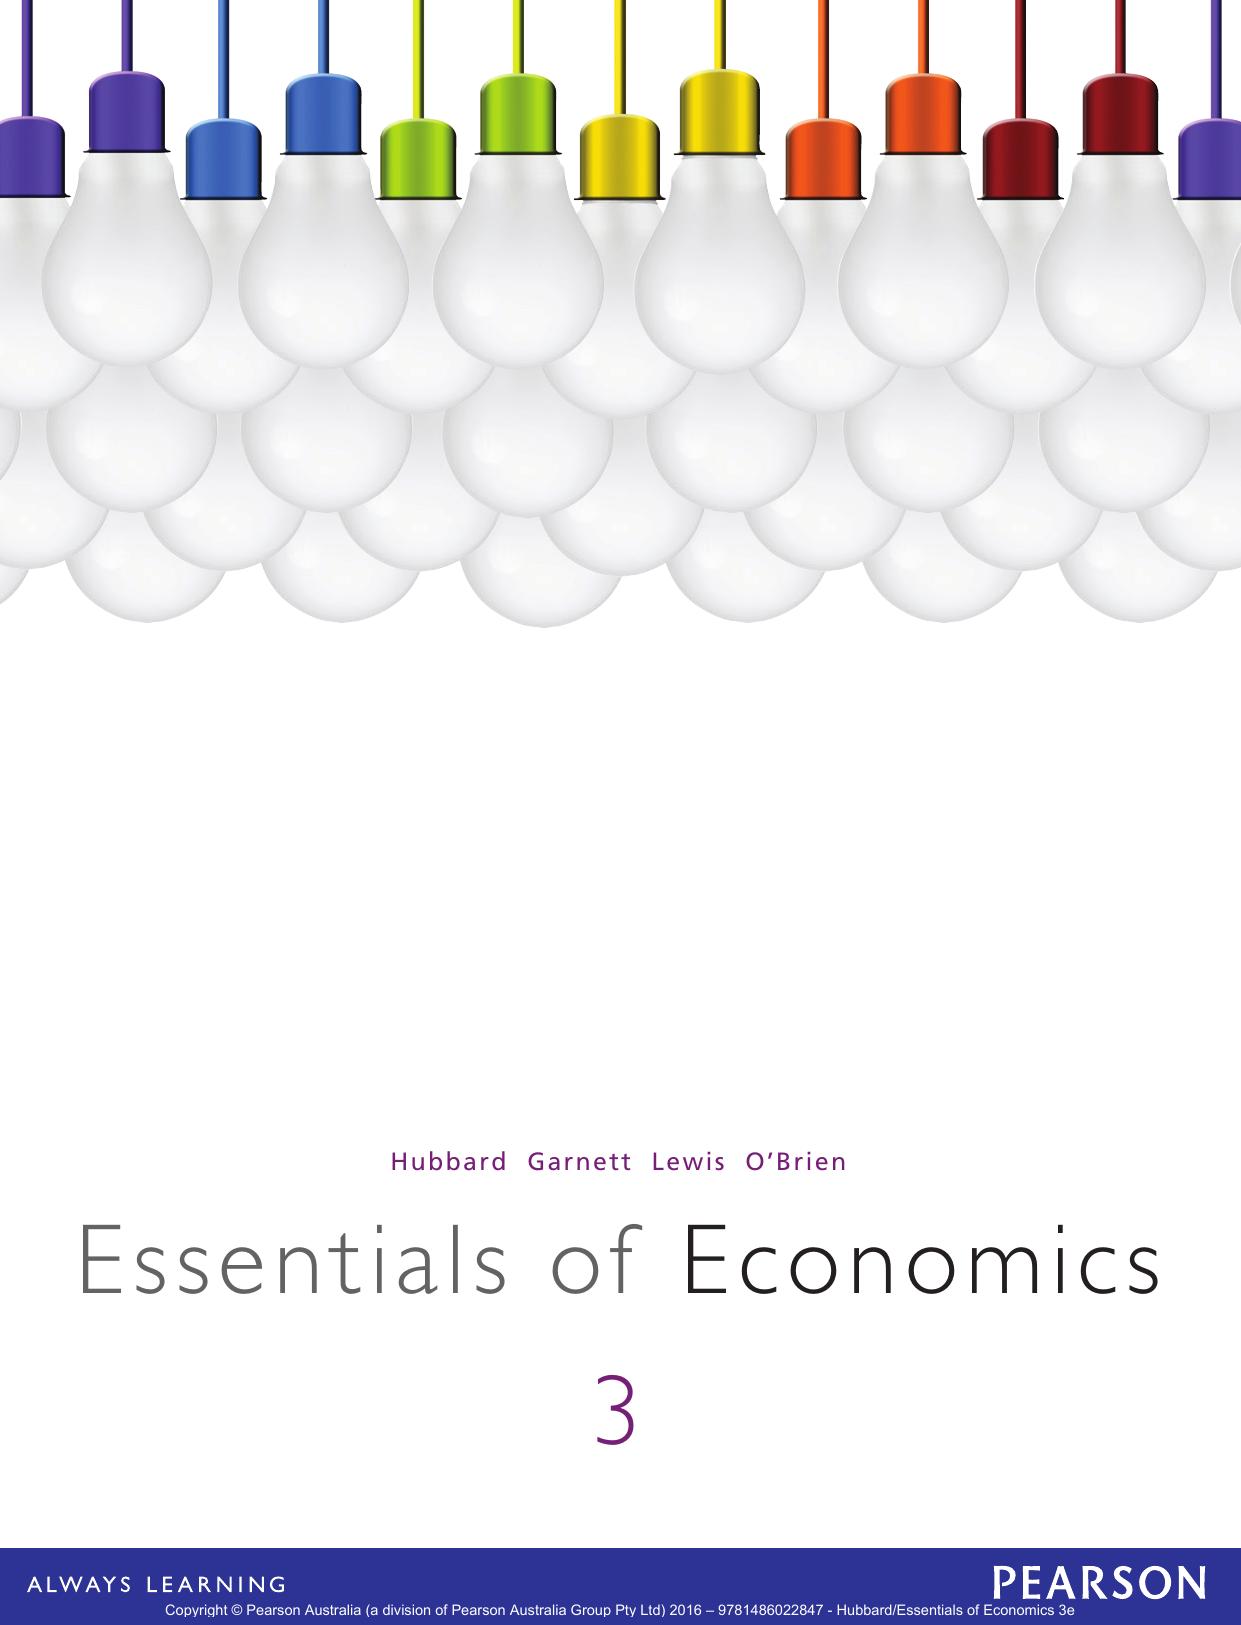 (Test Bank)Essentials of Economics 3rd Australian Edition by Hubbard